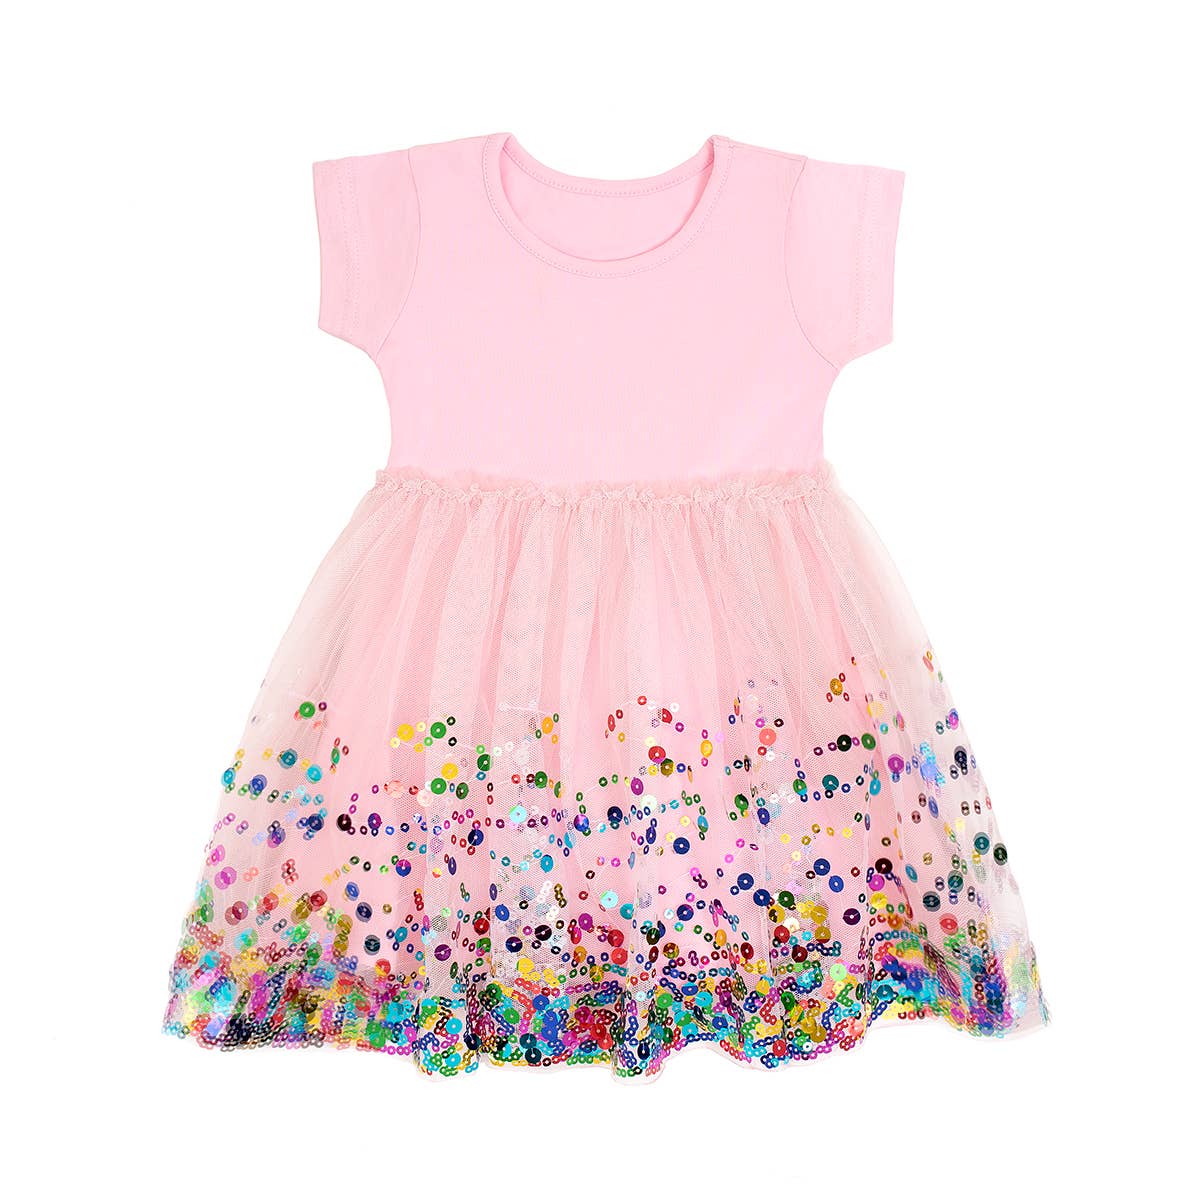 Pink Confetti Tutu Dress - Girls Dress